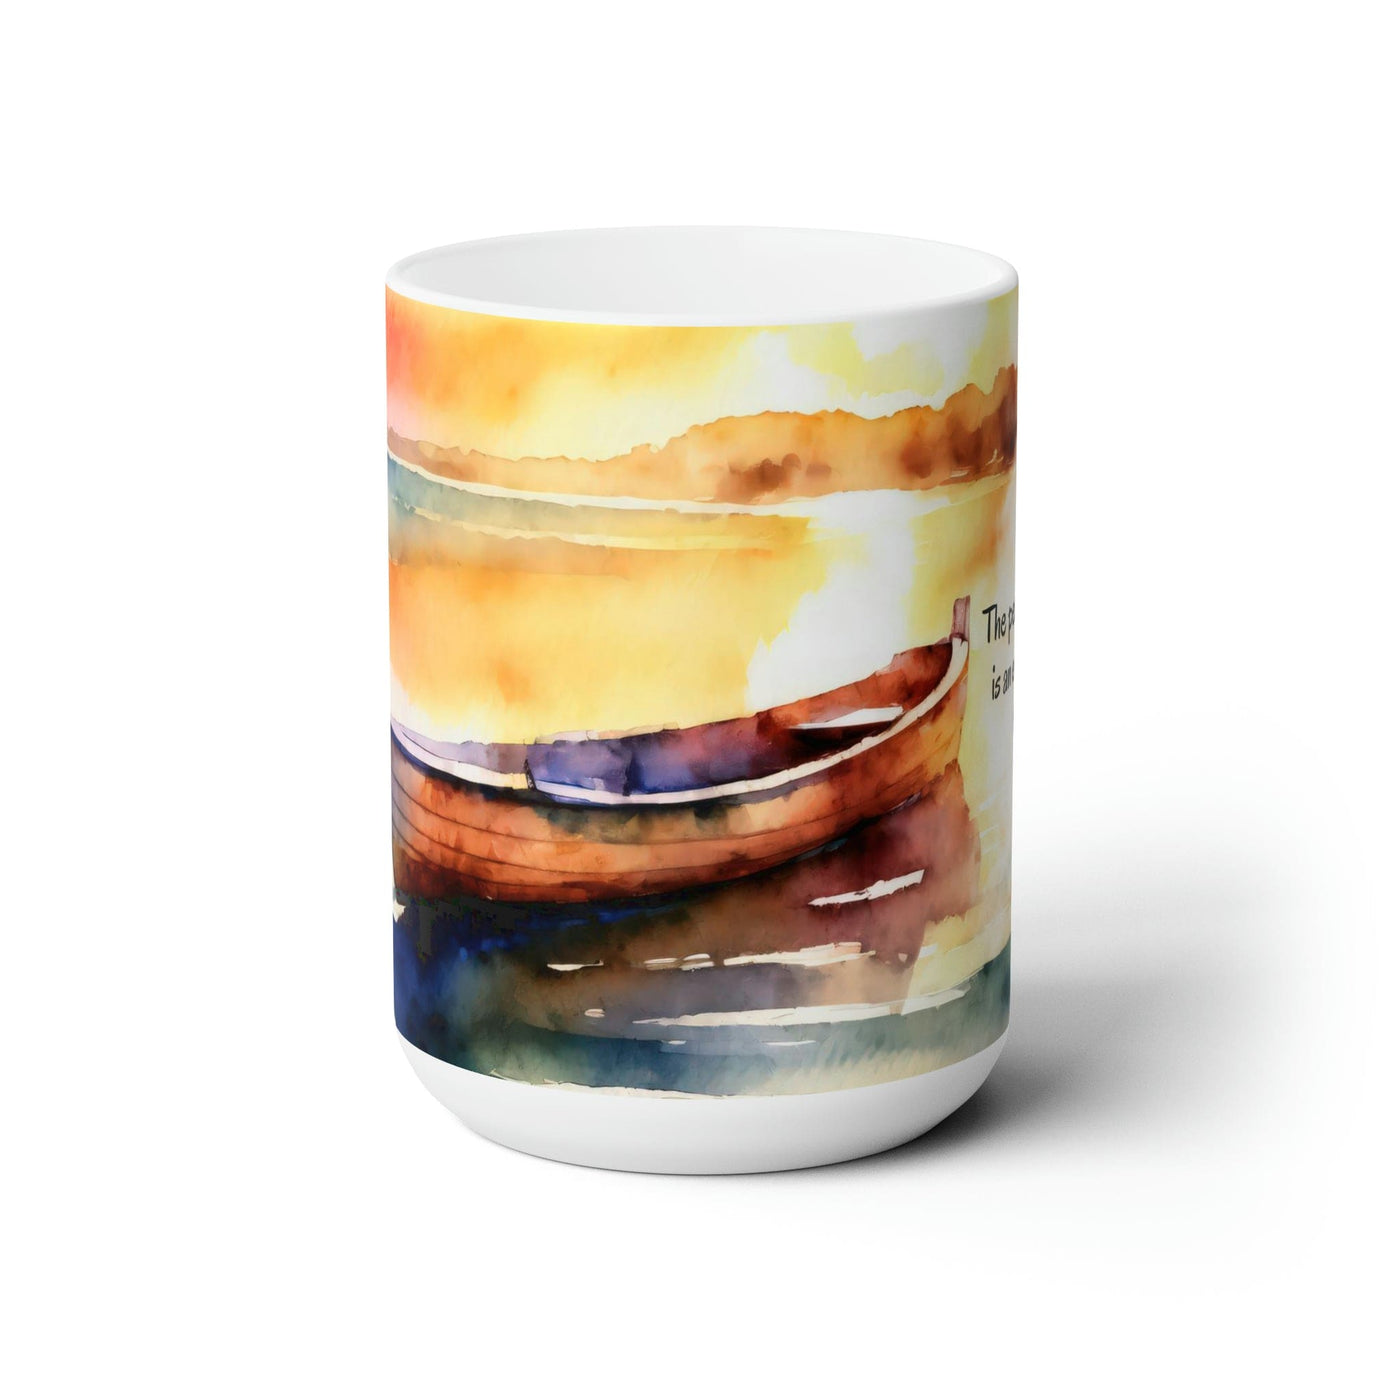 Ceramic Mug 15oz The Peace Of God - Everlasting River Illustration Decorative